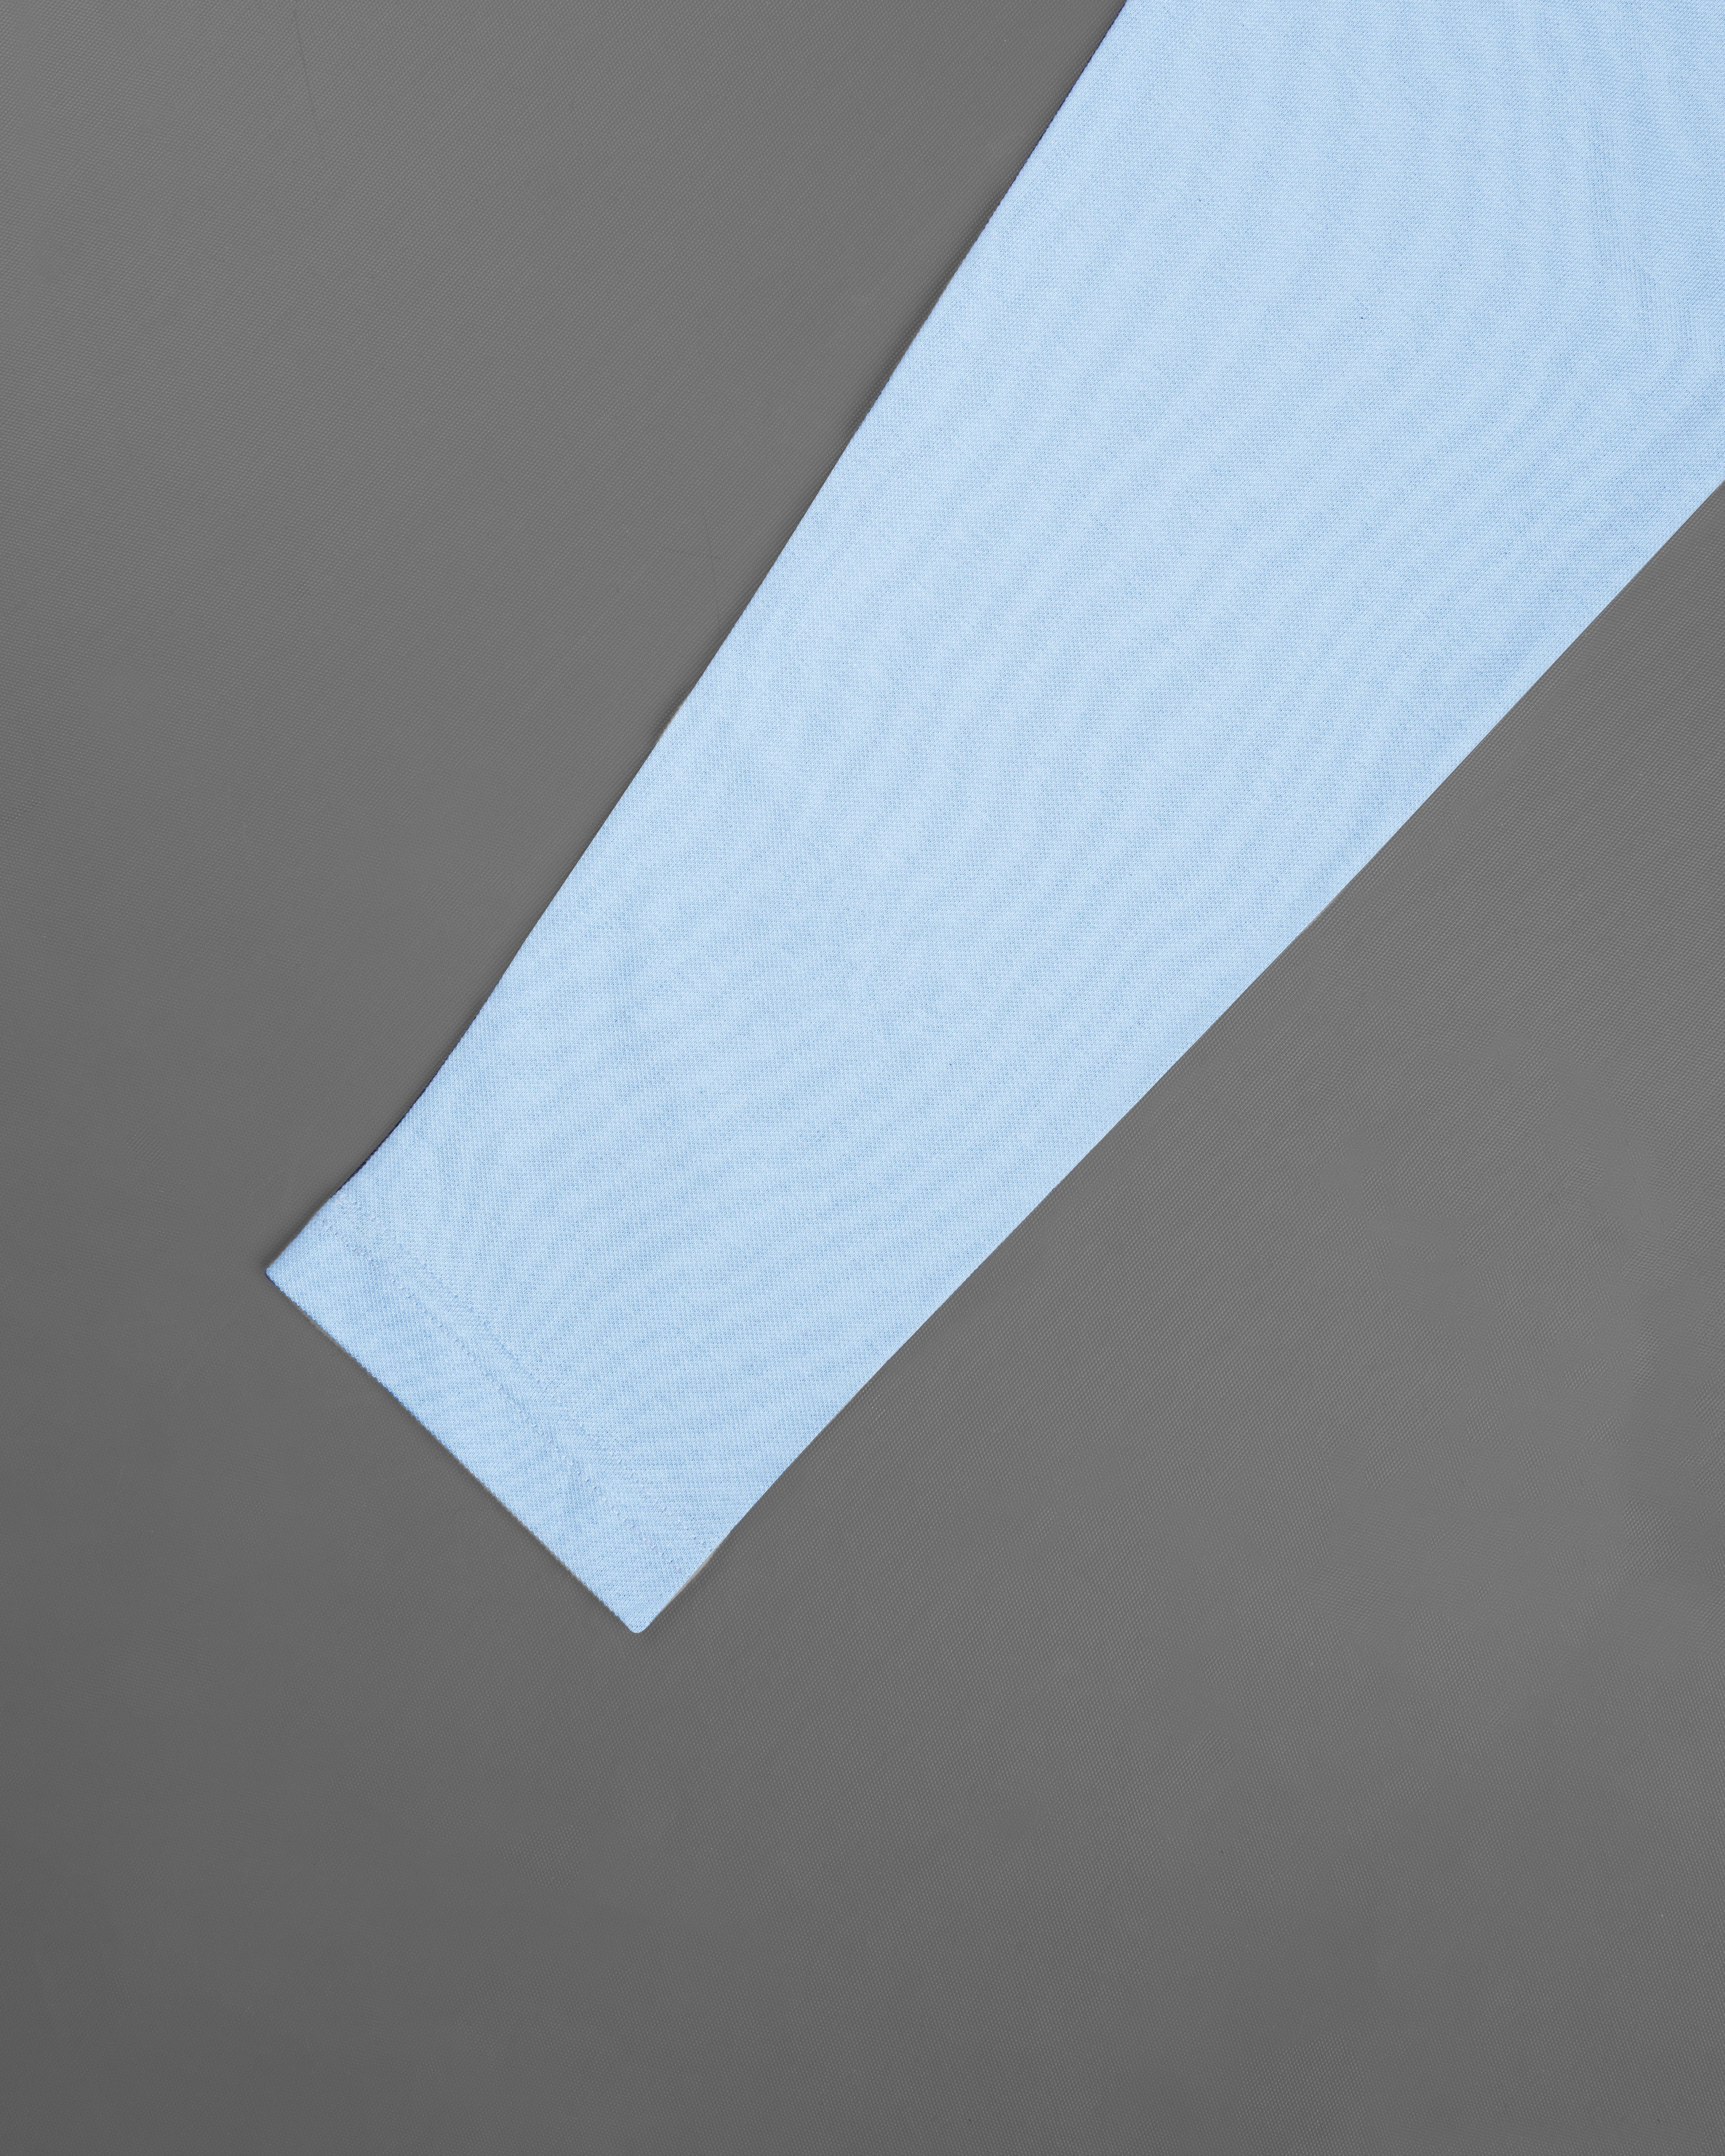 Pale Cerulean Blue Full sleeve Premiums Cotton Pique Polo  TS565-S, TS565-M, TS565-L, TS565-XL, TS565-XXL, TS565-3XL, TS565-4XL